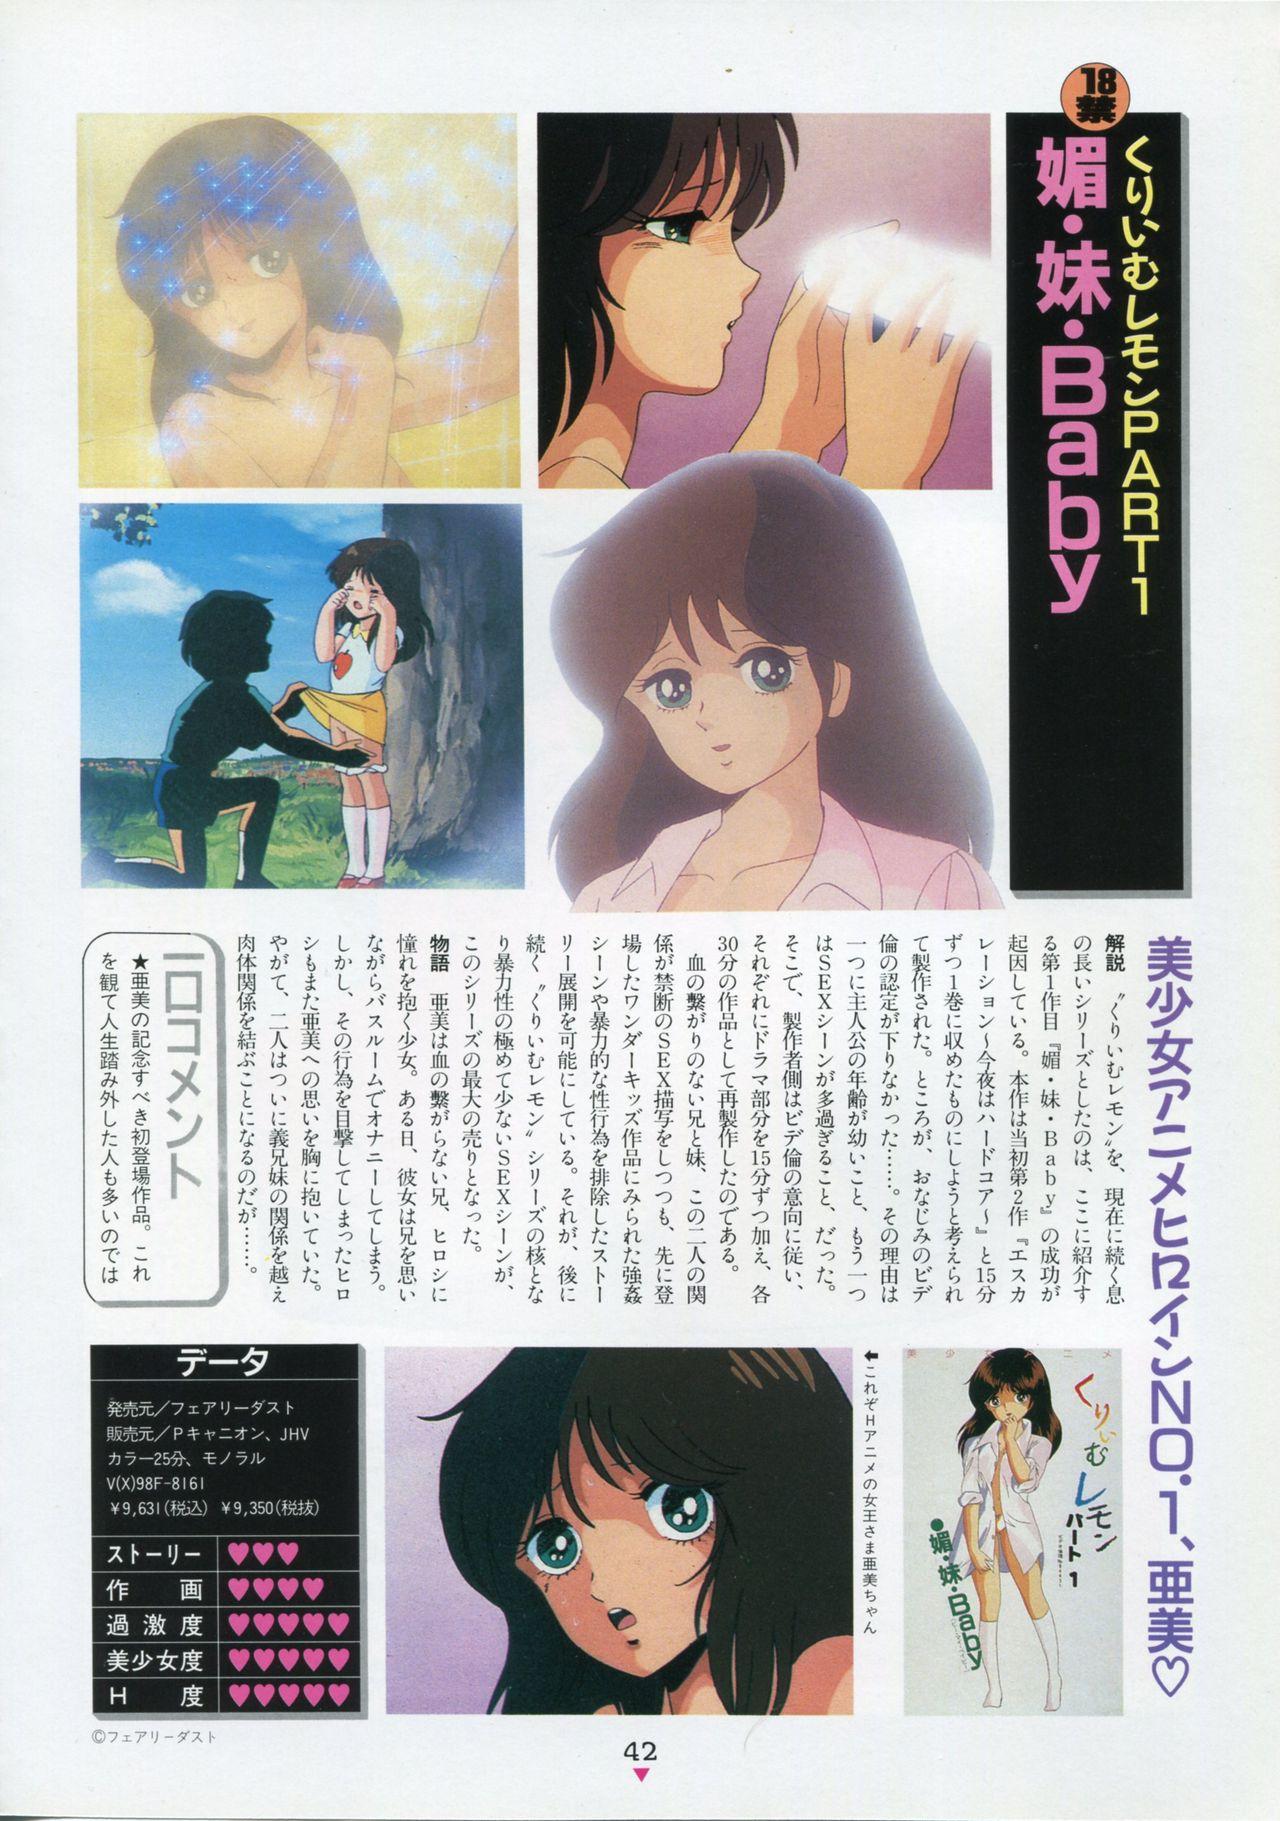 Bishoujo Anime Daizenshuu - Adult Animation Video Catalog 1991 37